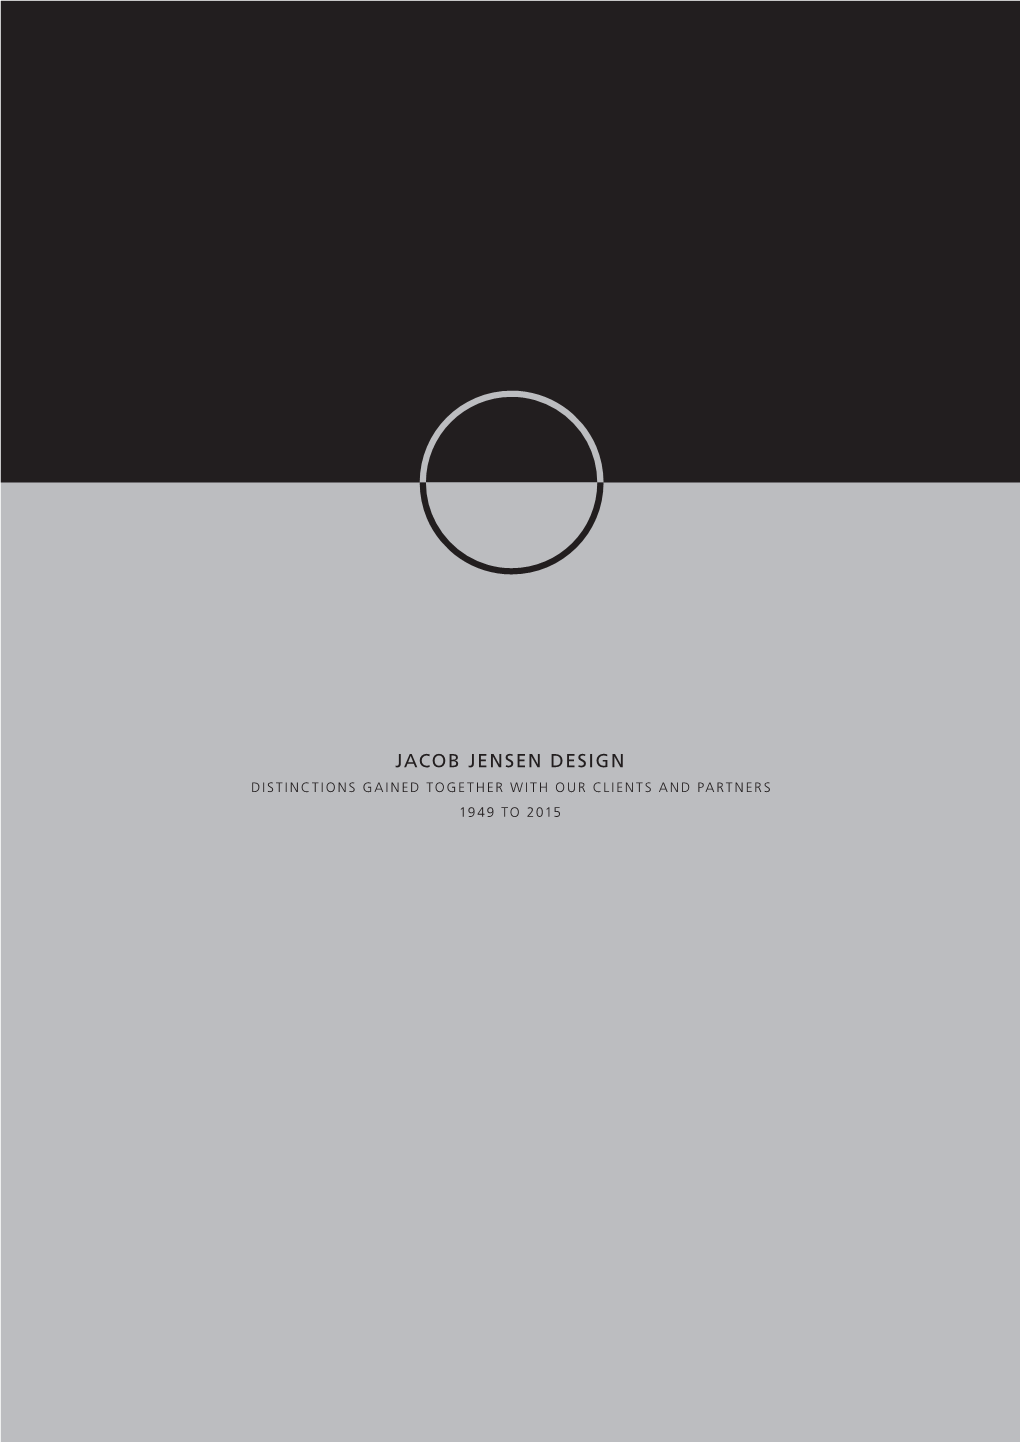 Jacob Jensen Design AWARD DISTINCTIONS 2015